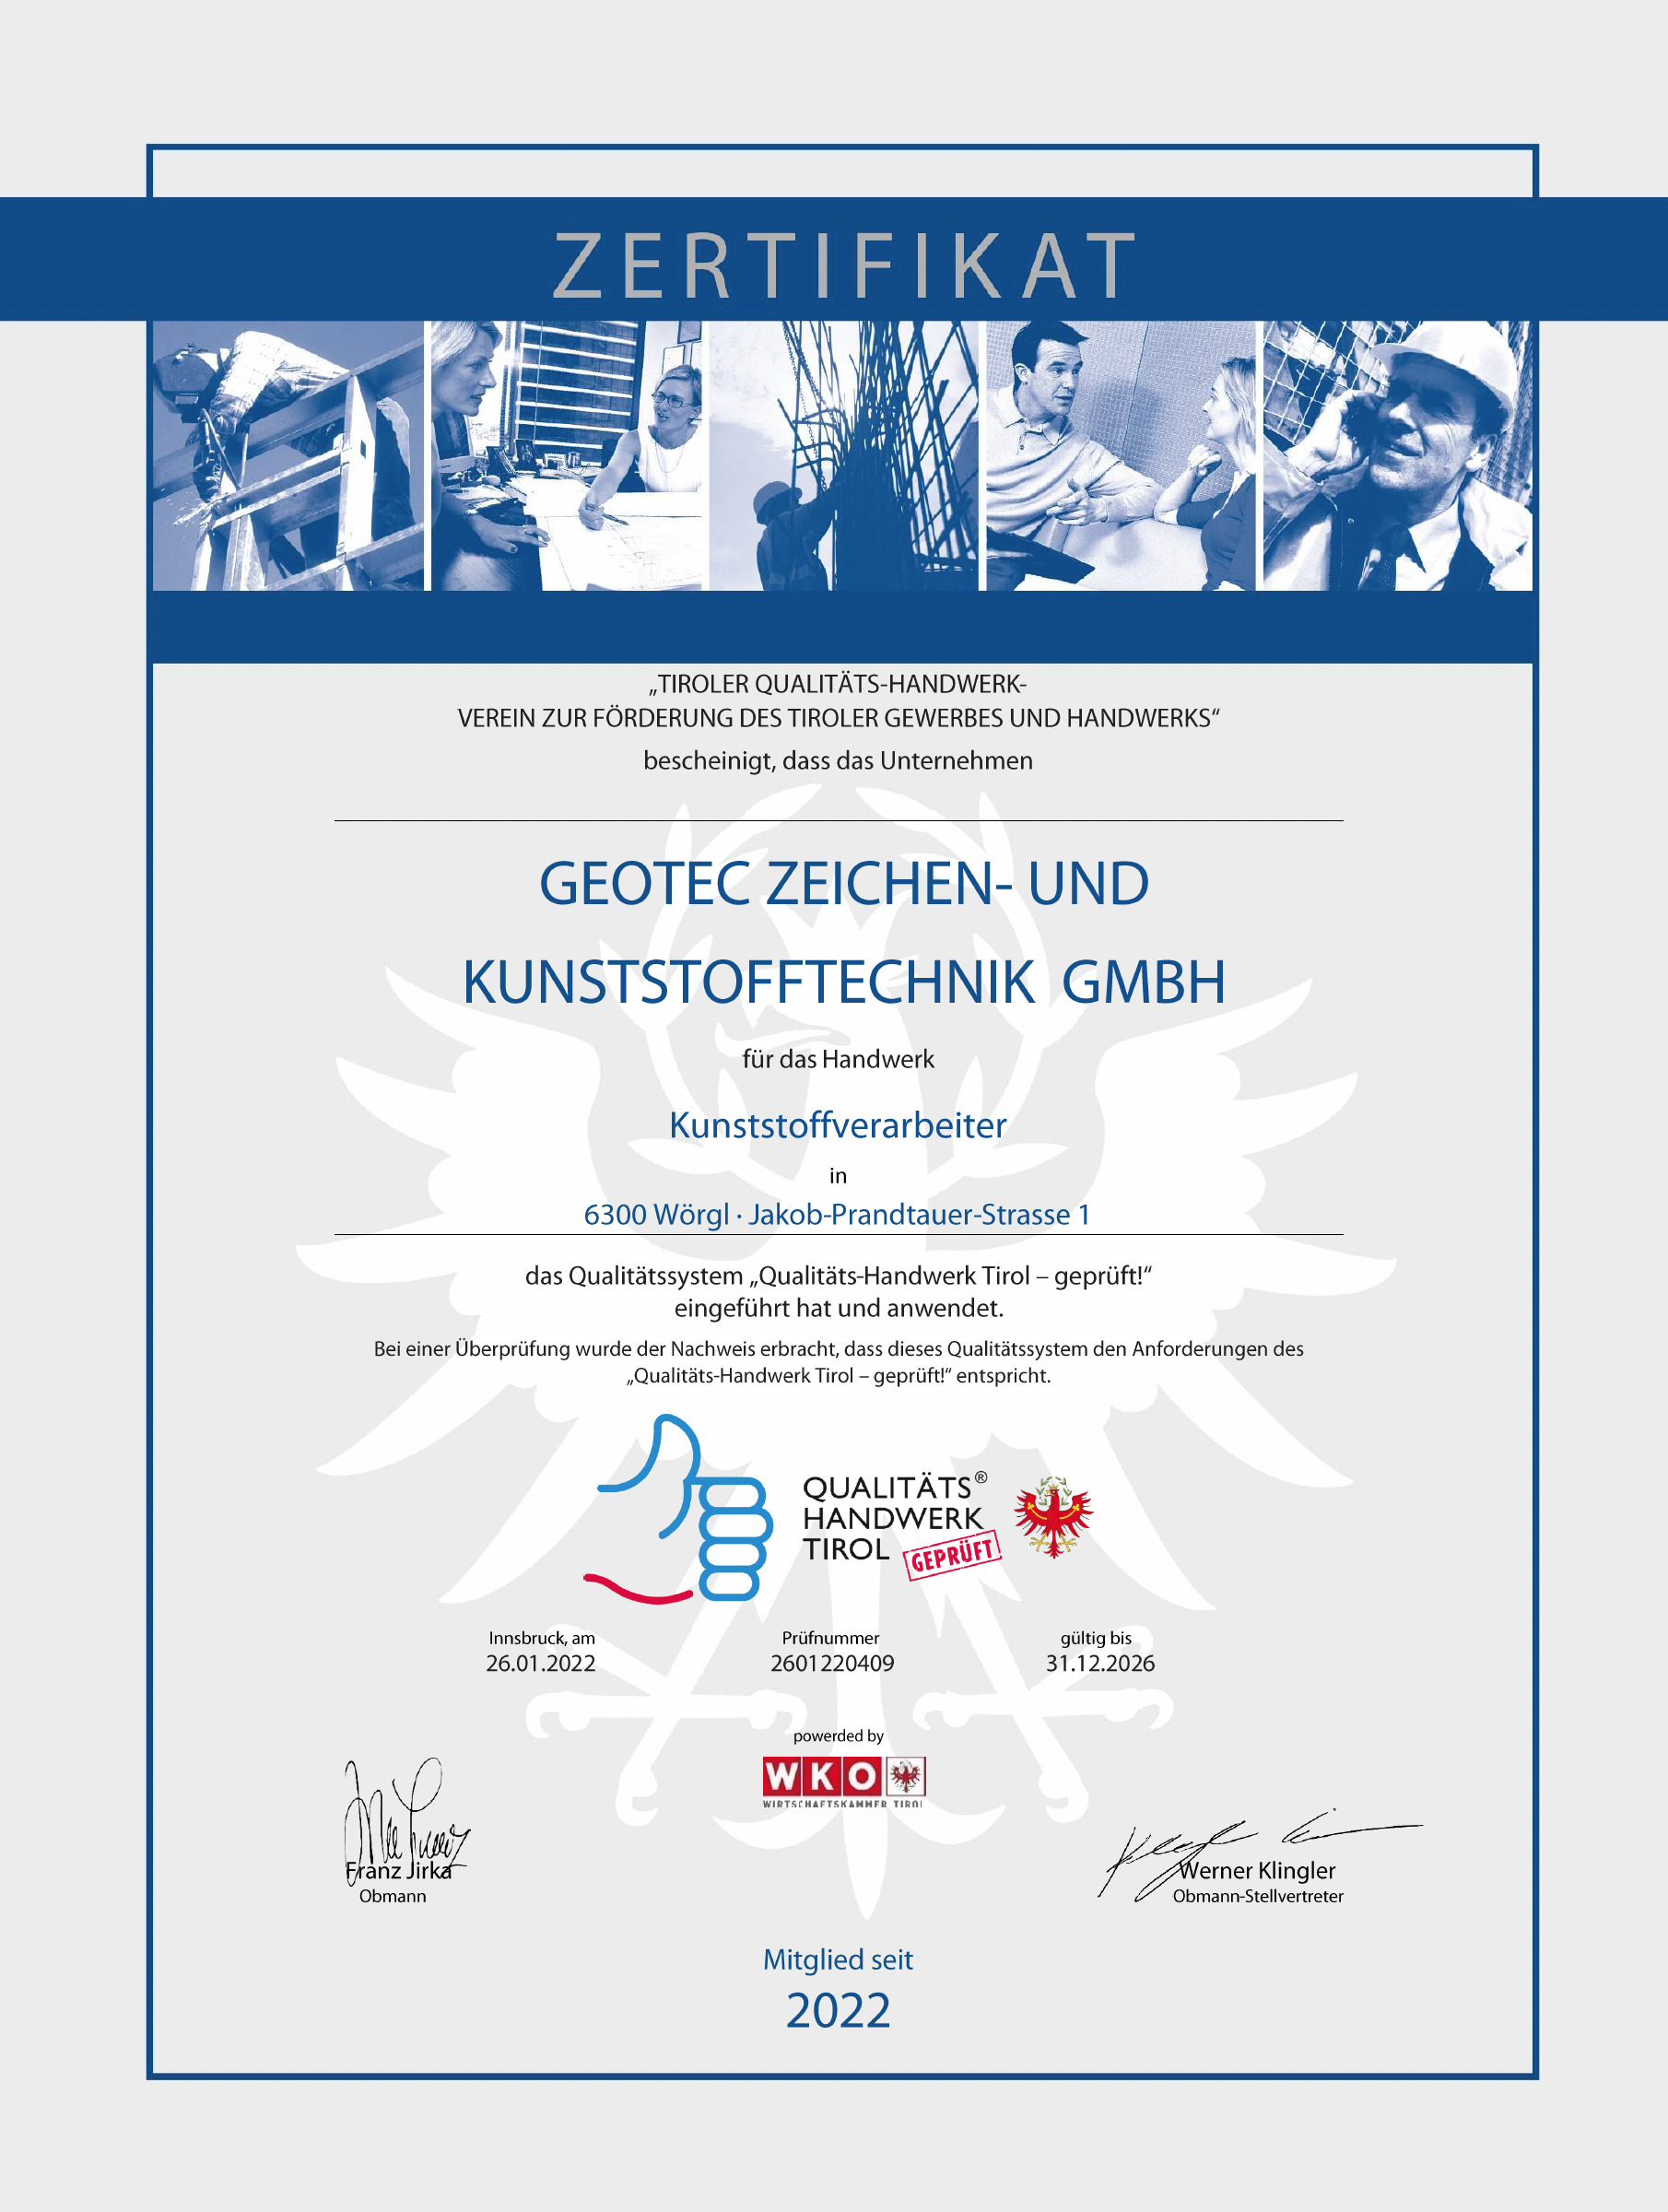 Zertifikat Qualitäts Handwerk Tirol